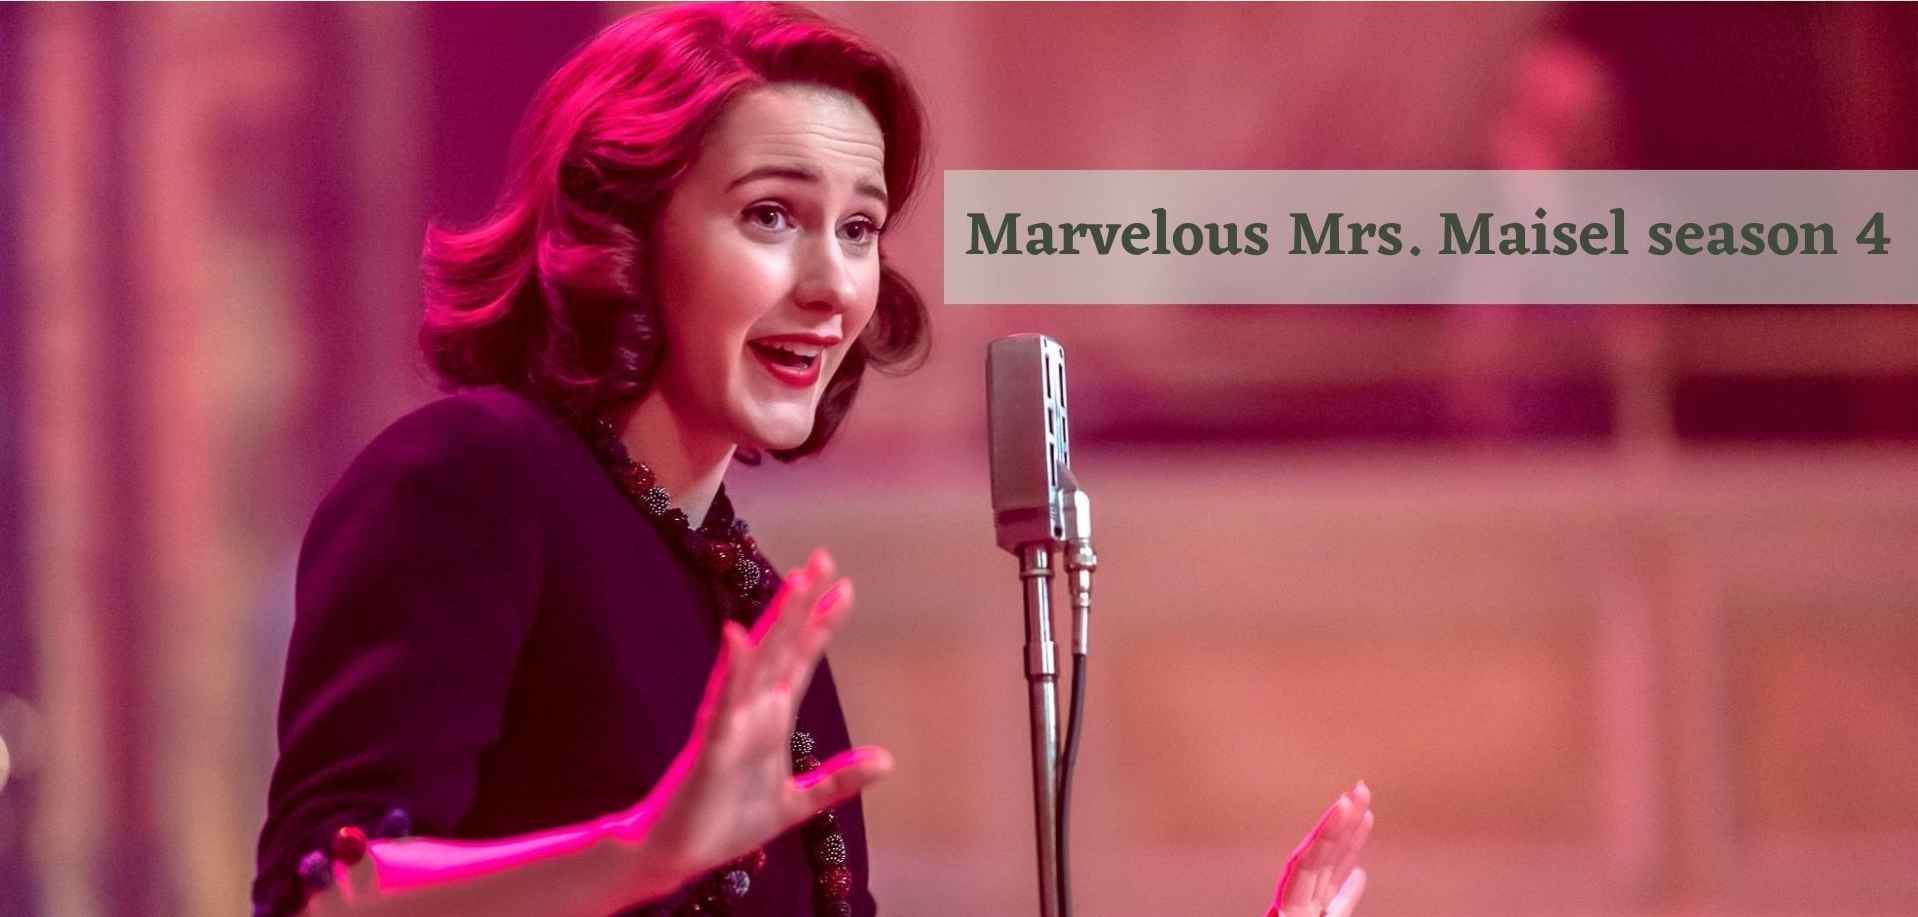 Marvelous Mrs. Maisel season 4